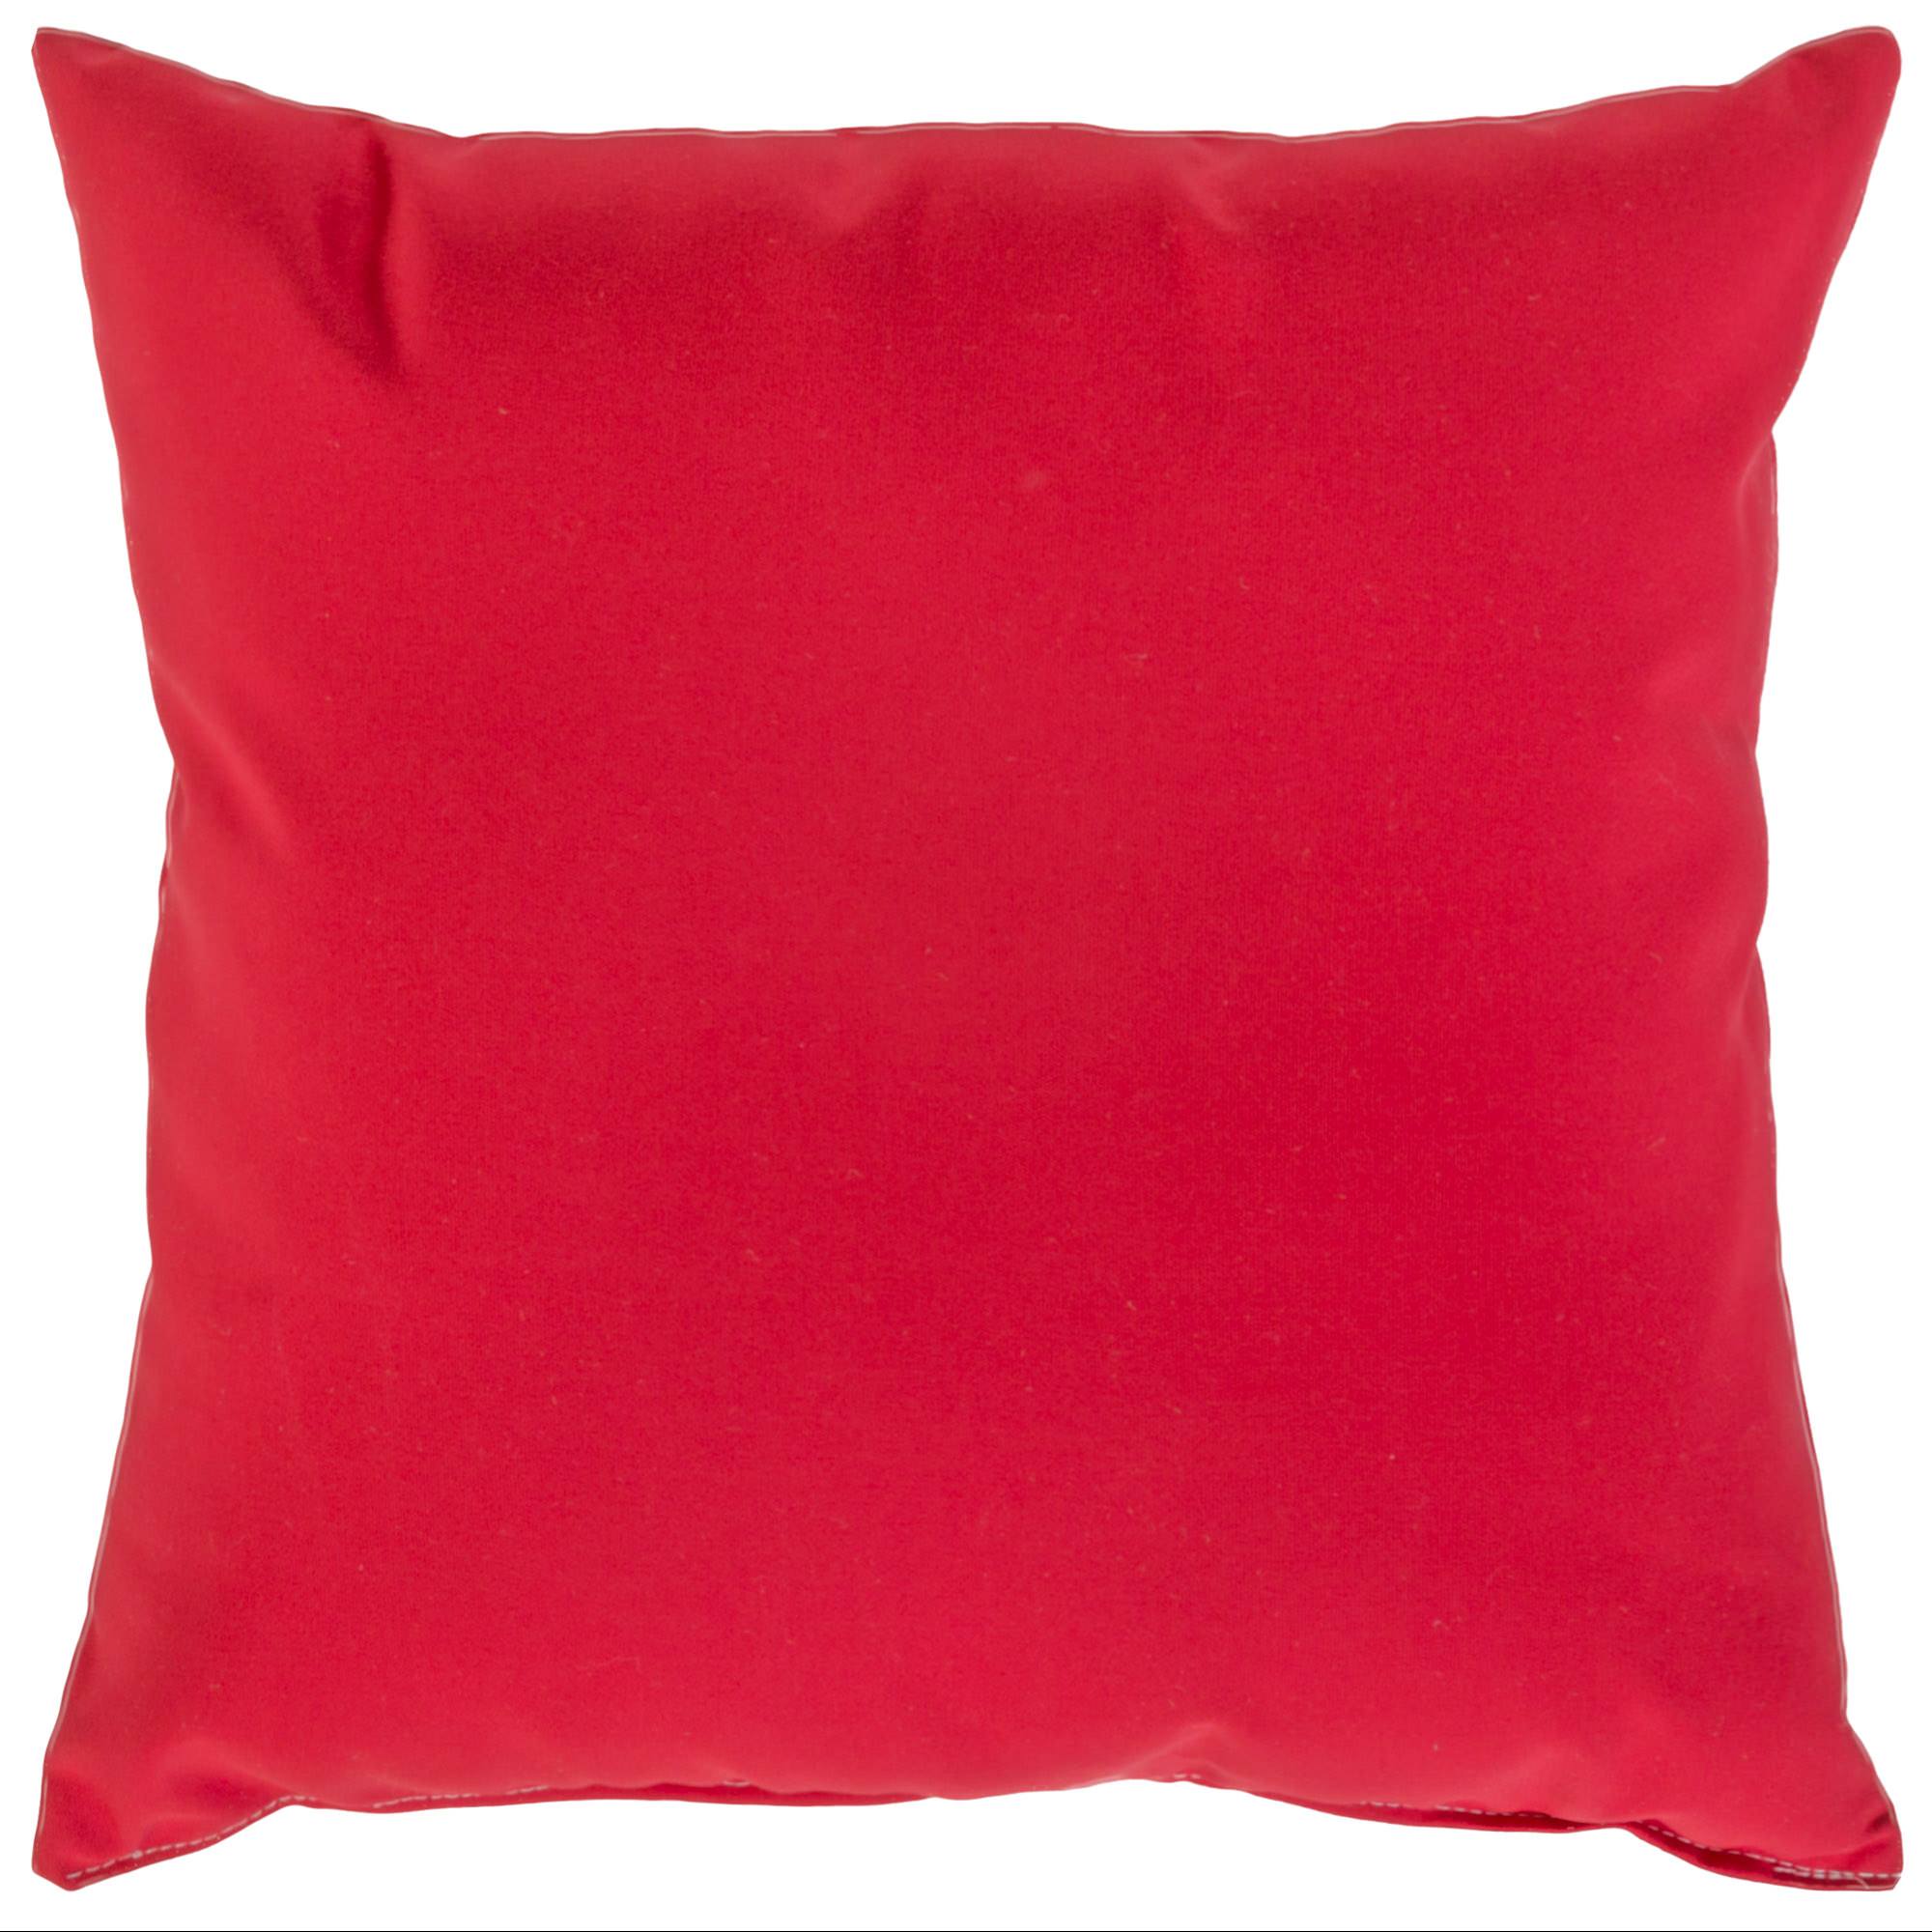 Купить подушки 5. Декоративные подушки. Яркие подушки. Подушки квадратные декоративные. Подушка красный.